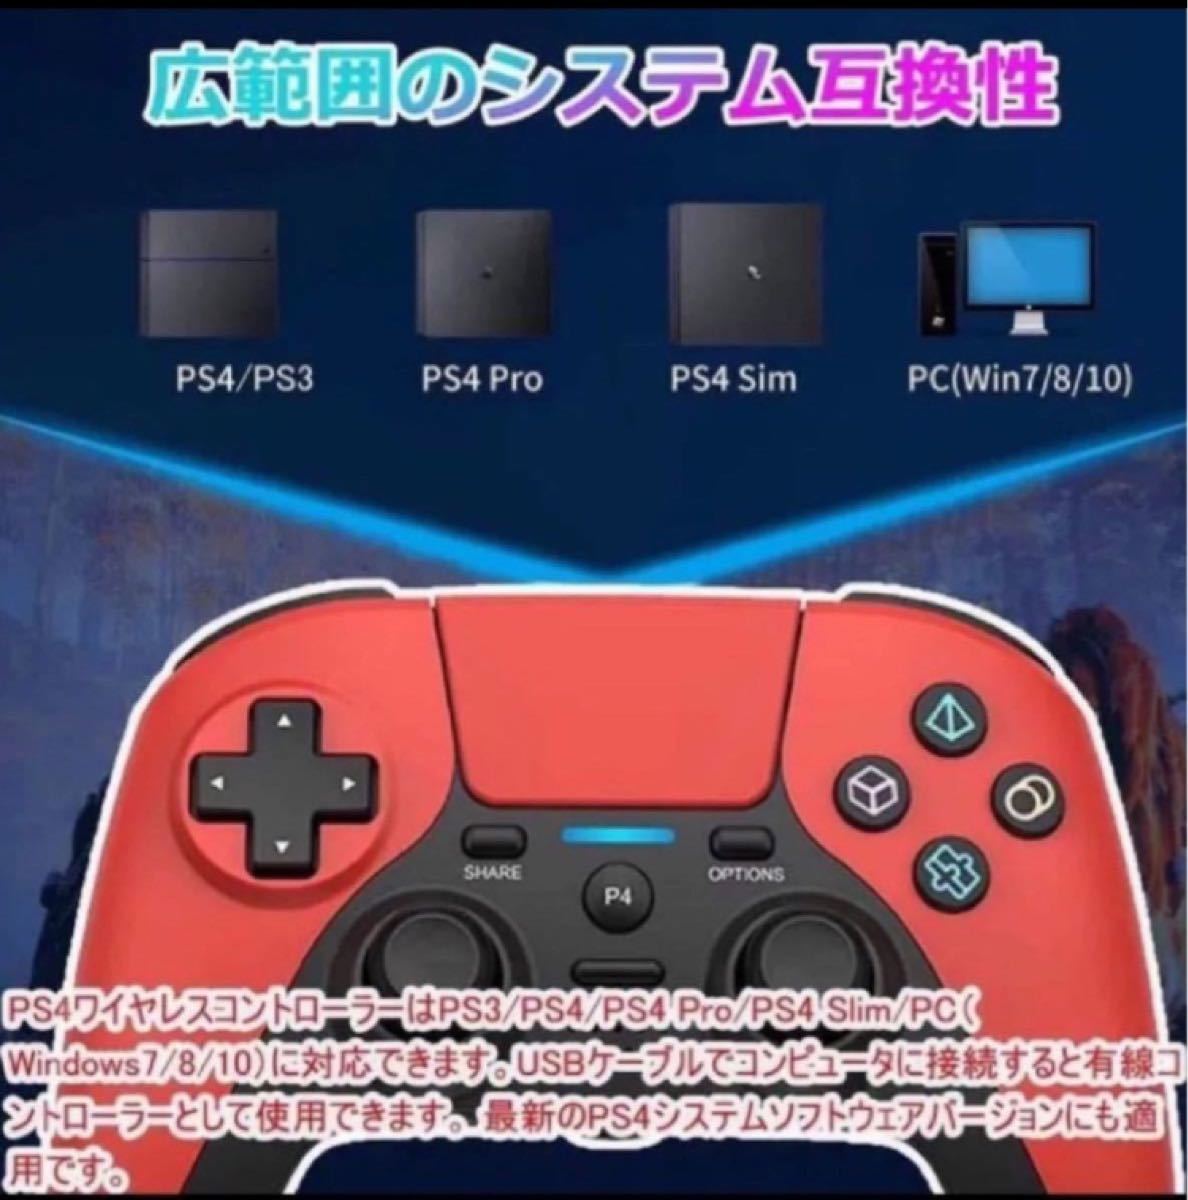 PS4互換ゲームコントローラー PS4用ワイヤレスコントローラー ワイヤレスコントローラー PS4